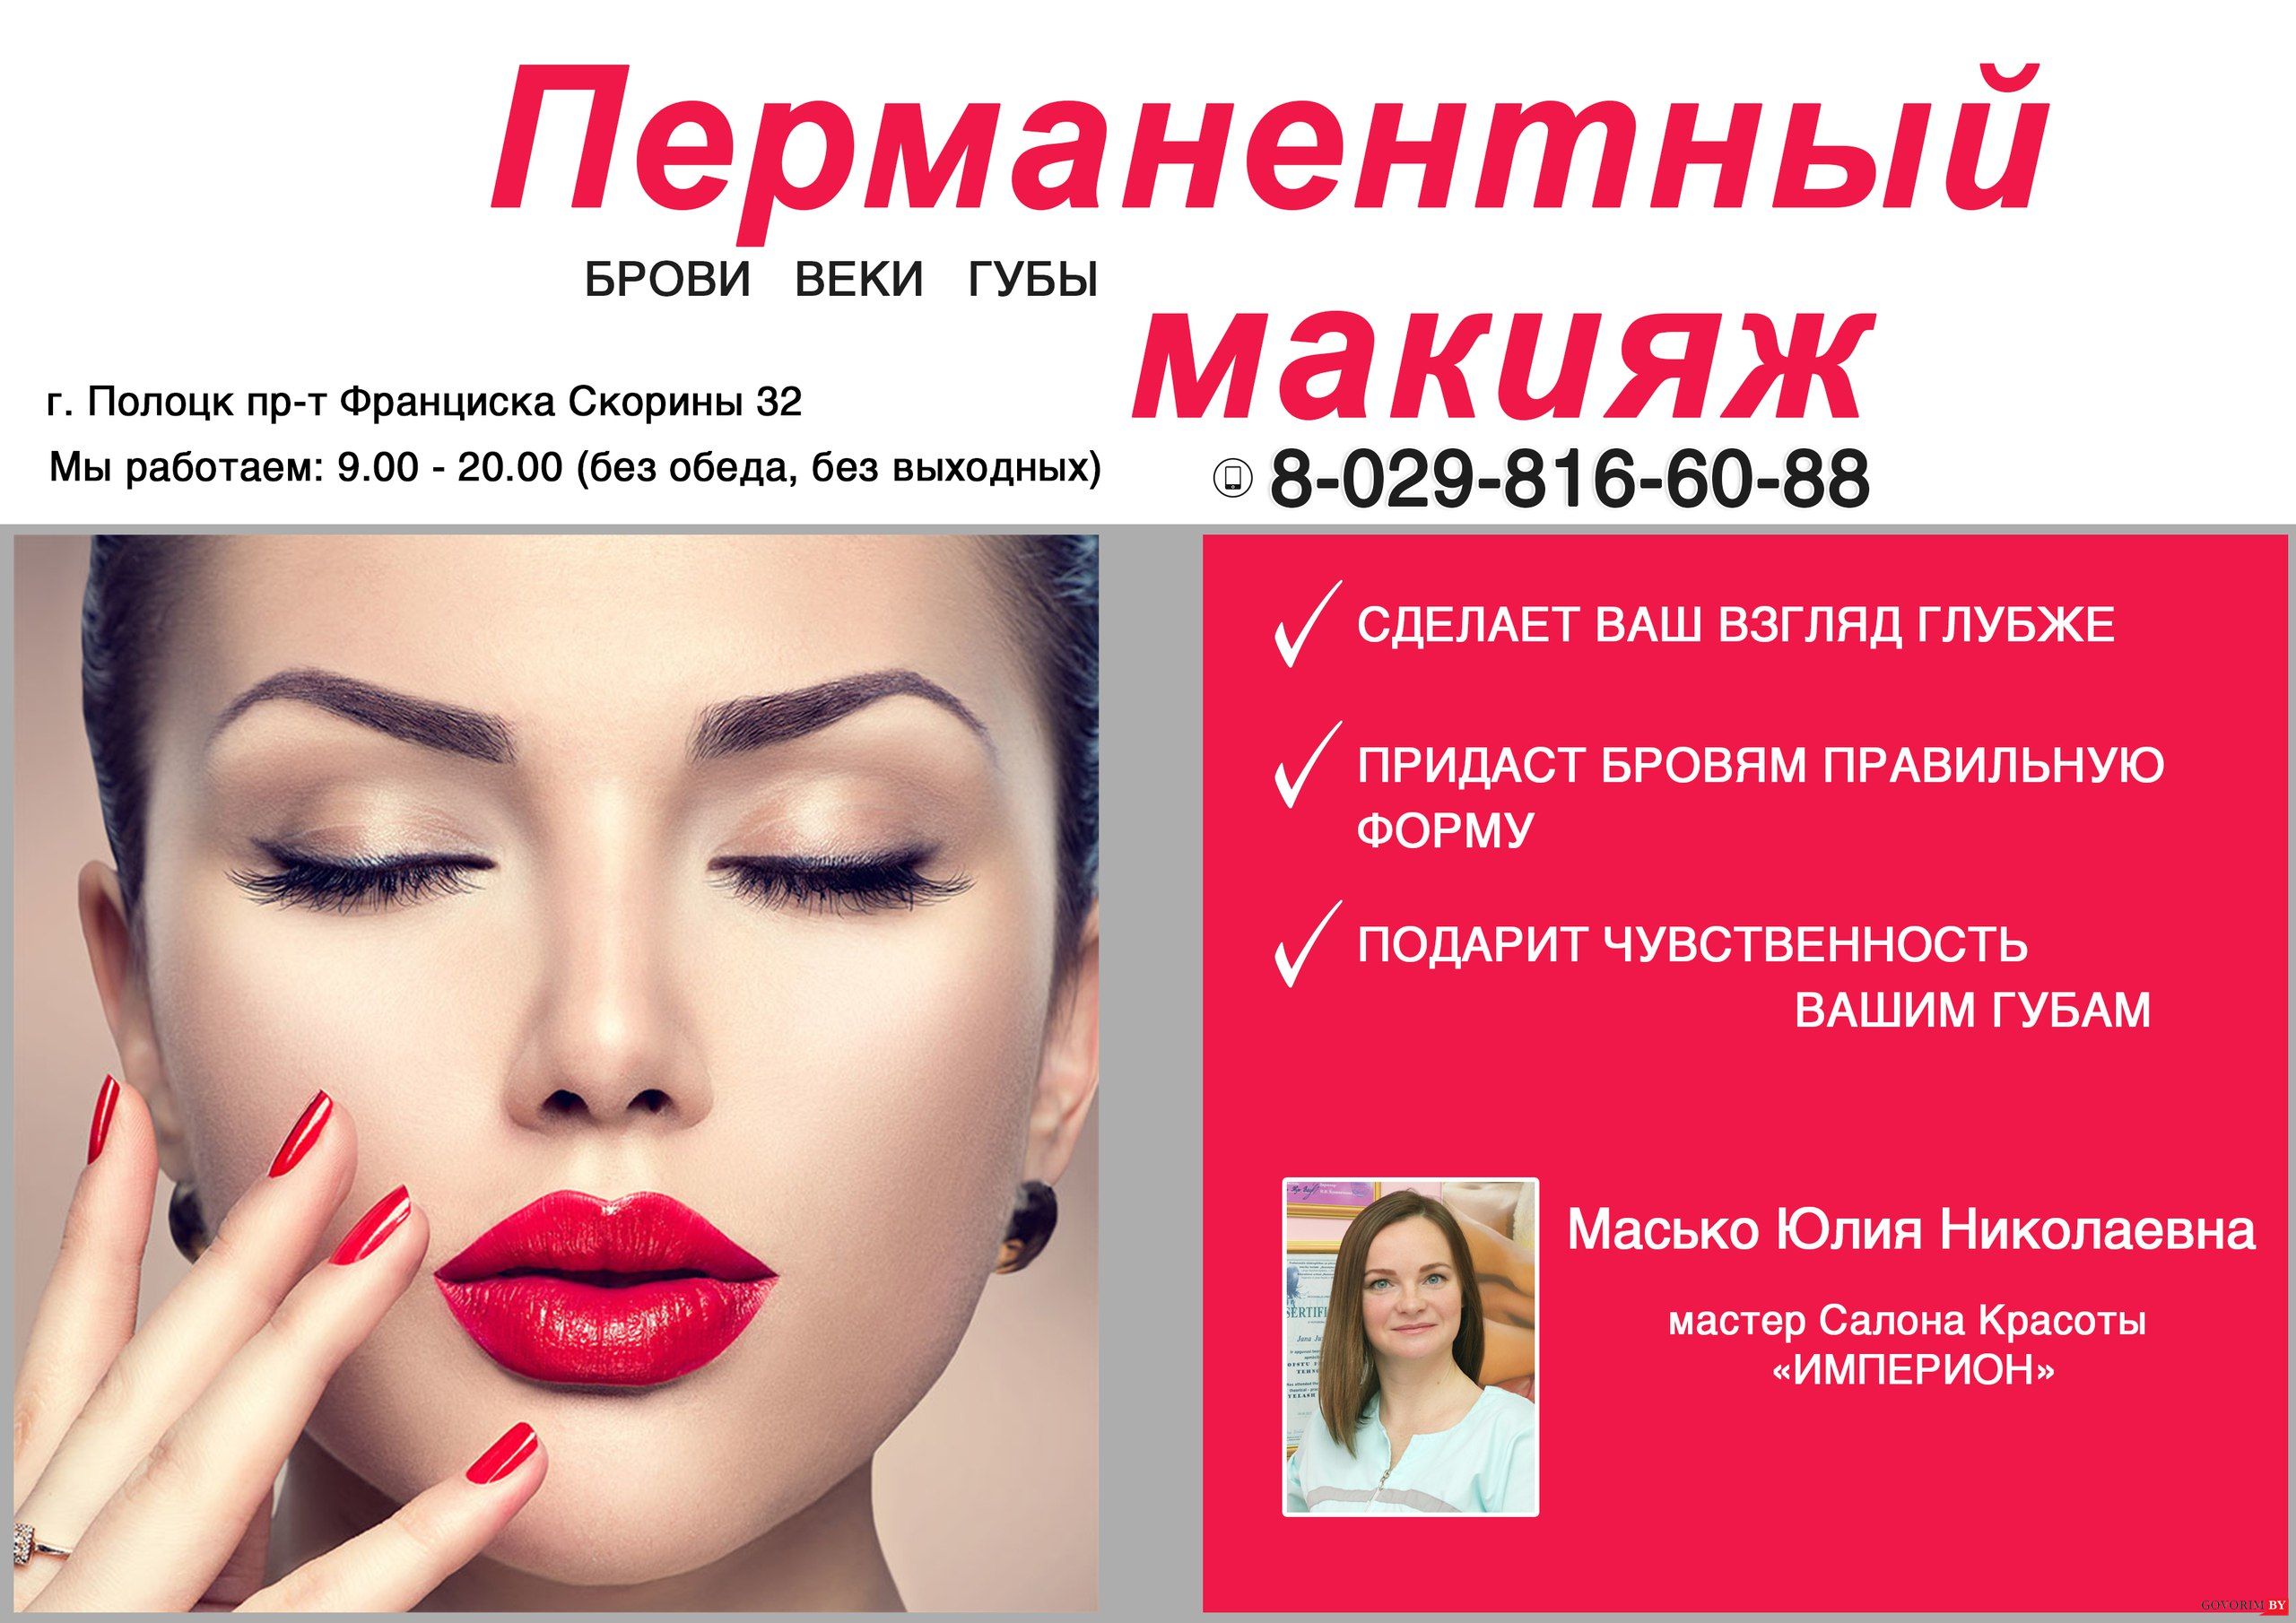 Реклама перманентного макияжа на визитки